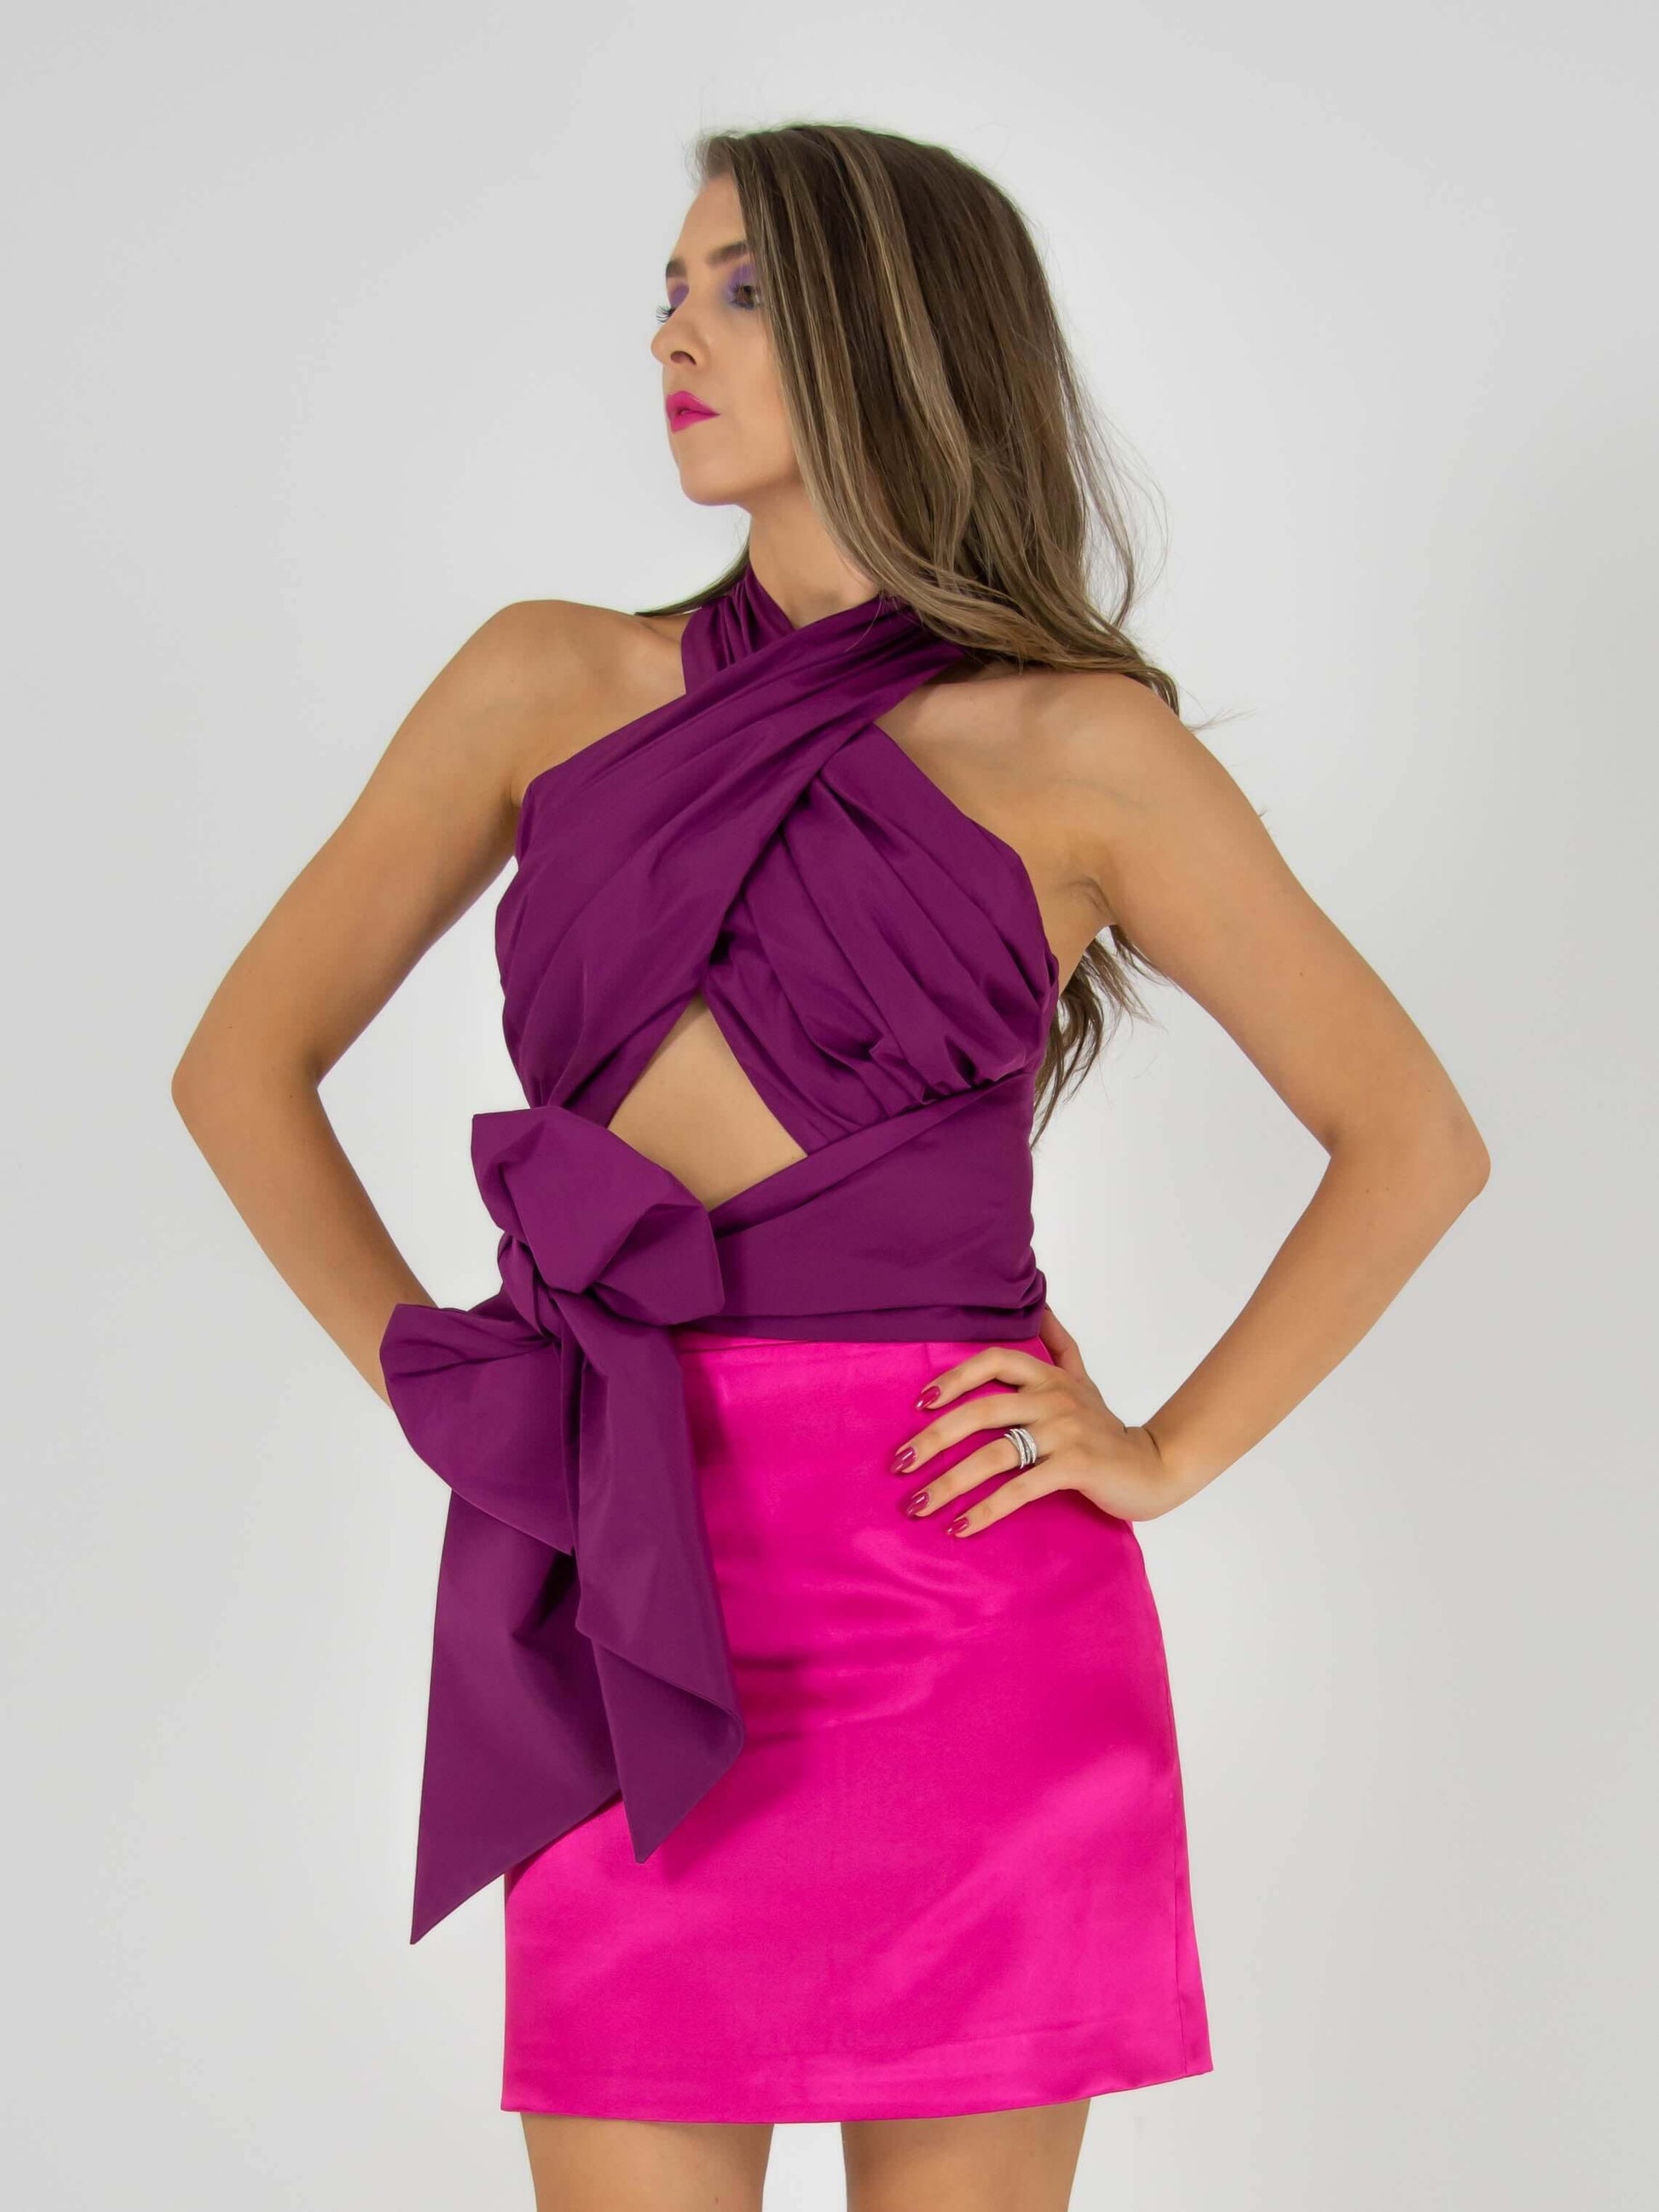 Vision of Love A-Line Mini Skirt - Pink by Tia Dorraine Women's Luxury Fashion Designer Clothing Brand